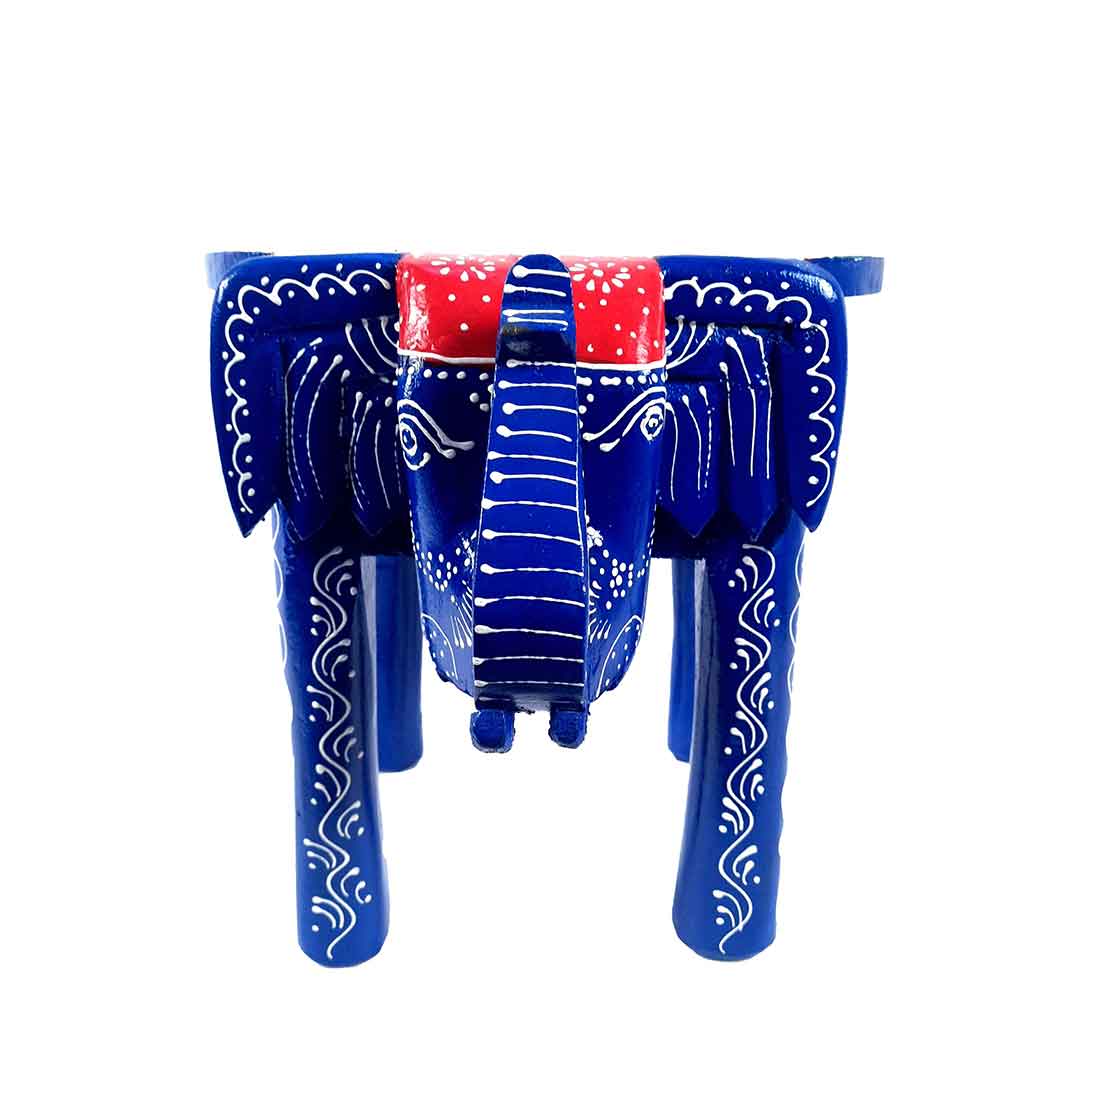 Elephant Design Wooden Stool  - for Office Decor & Gifts - 12 inch - ApkaMart